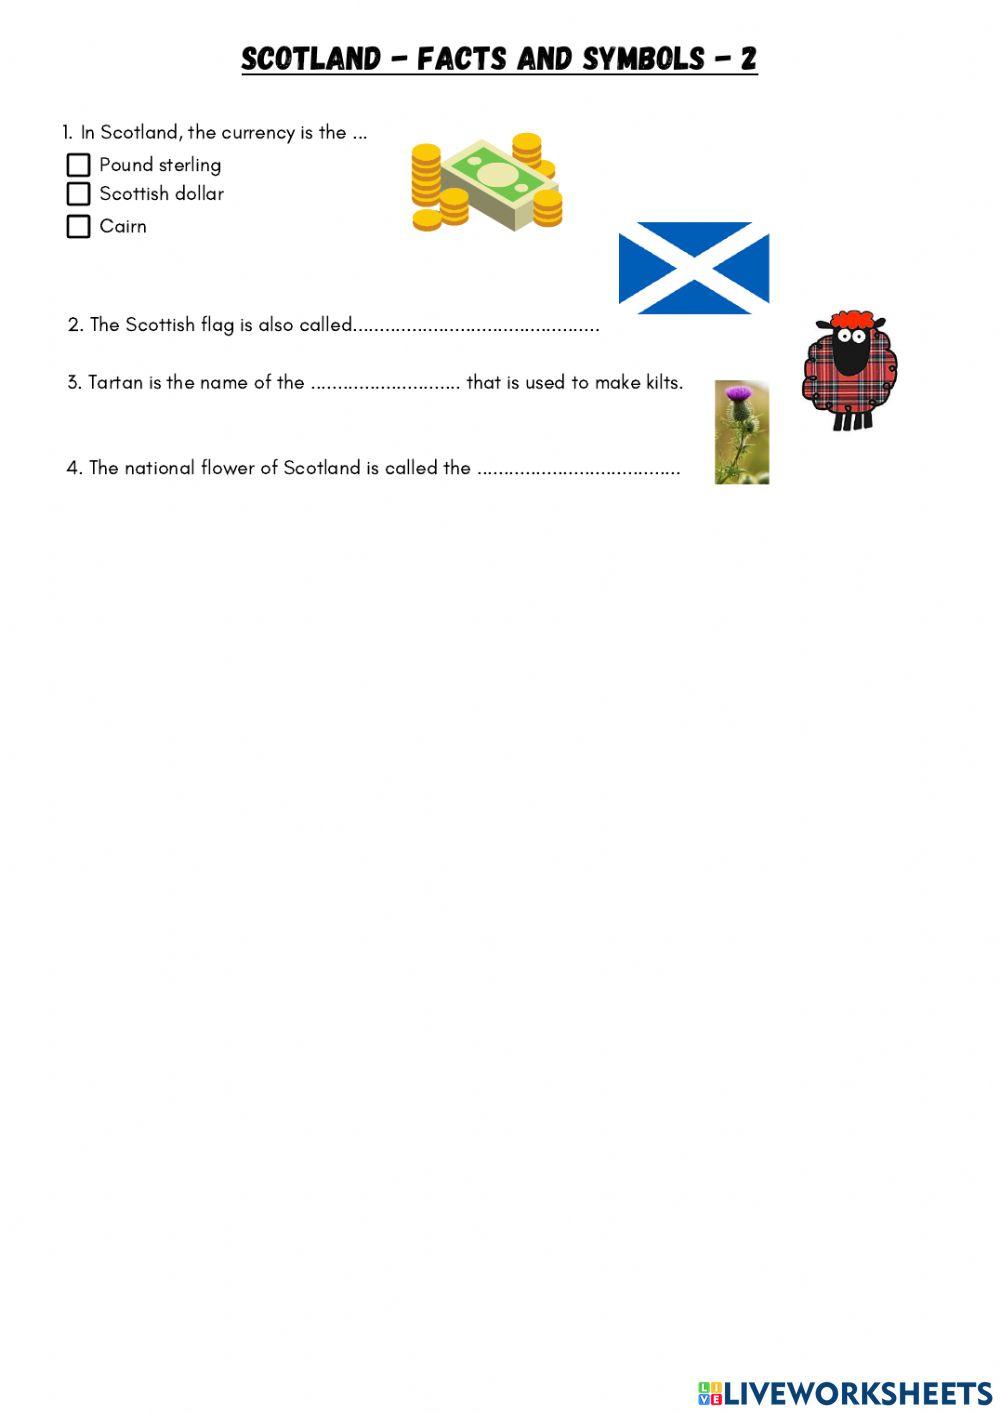 Scotland - Facts and Symbols - 2